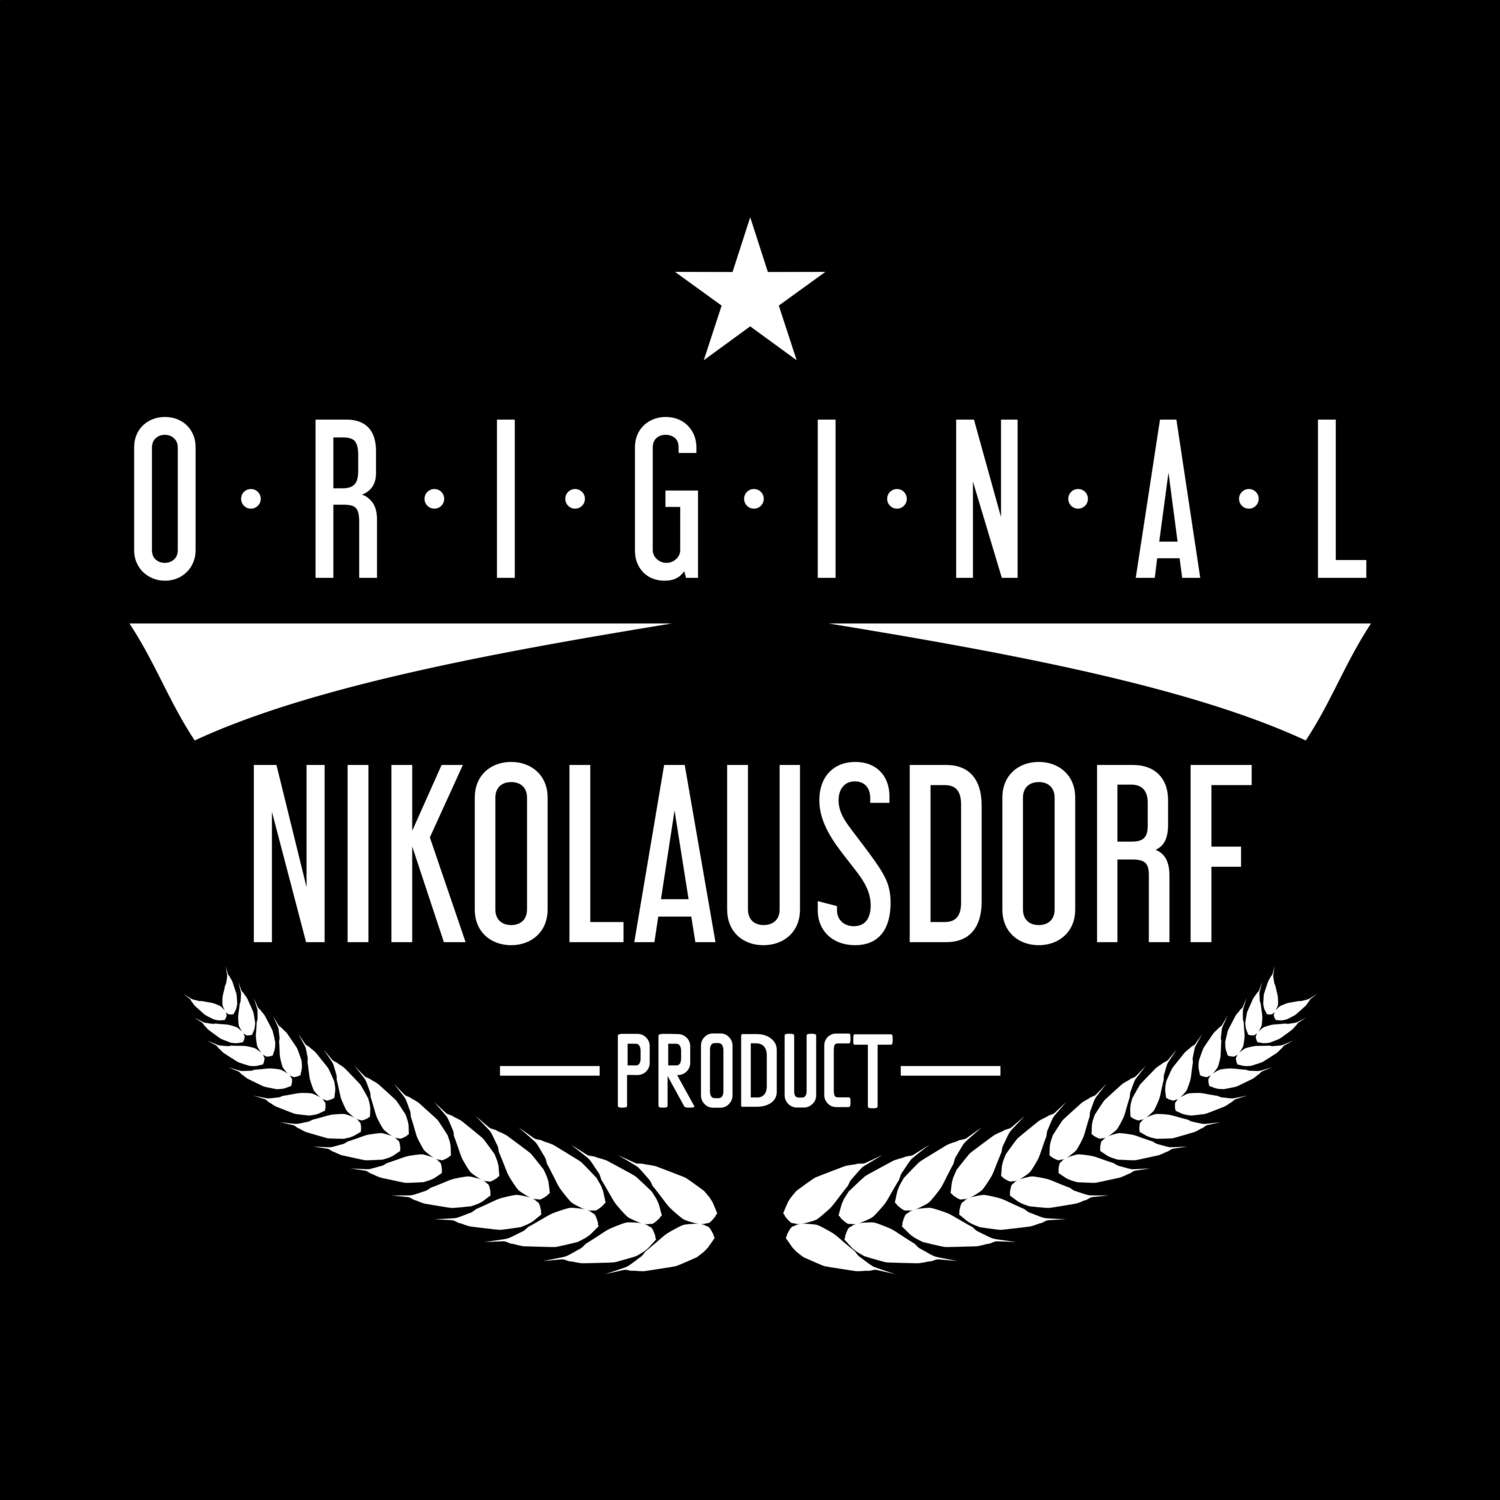 Nikolausdorf T-Shirt »Original Product«